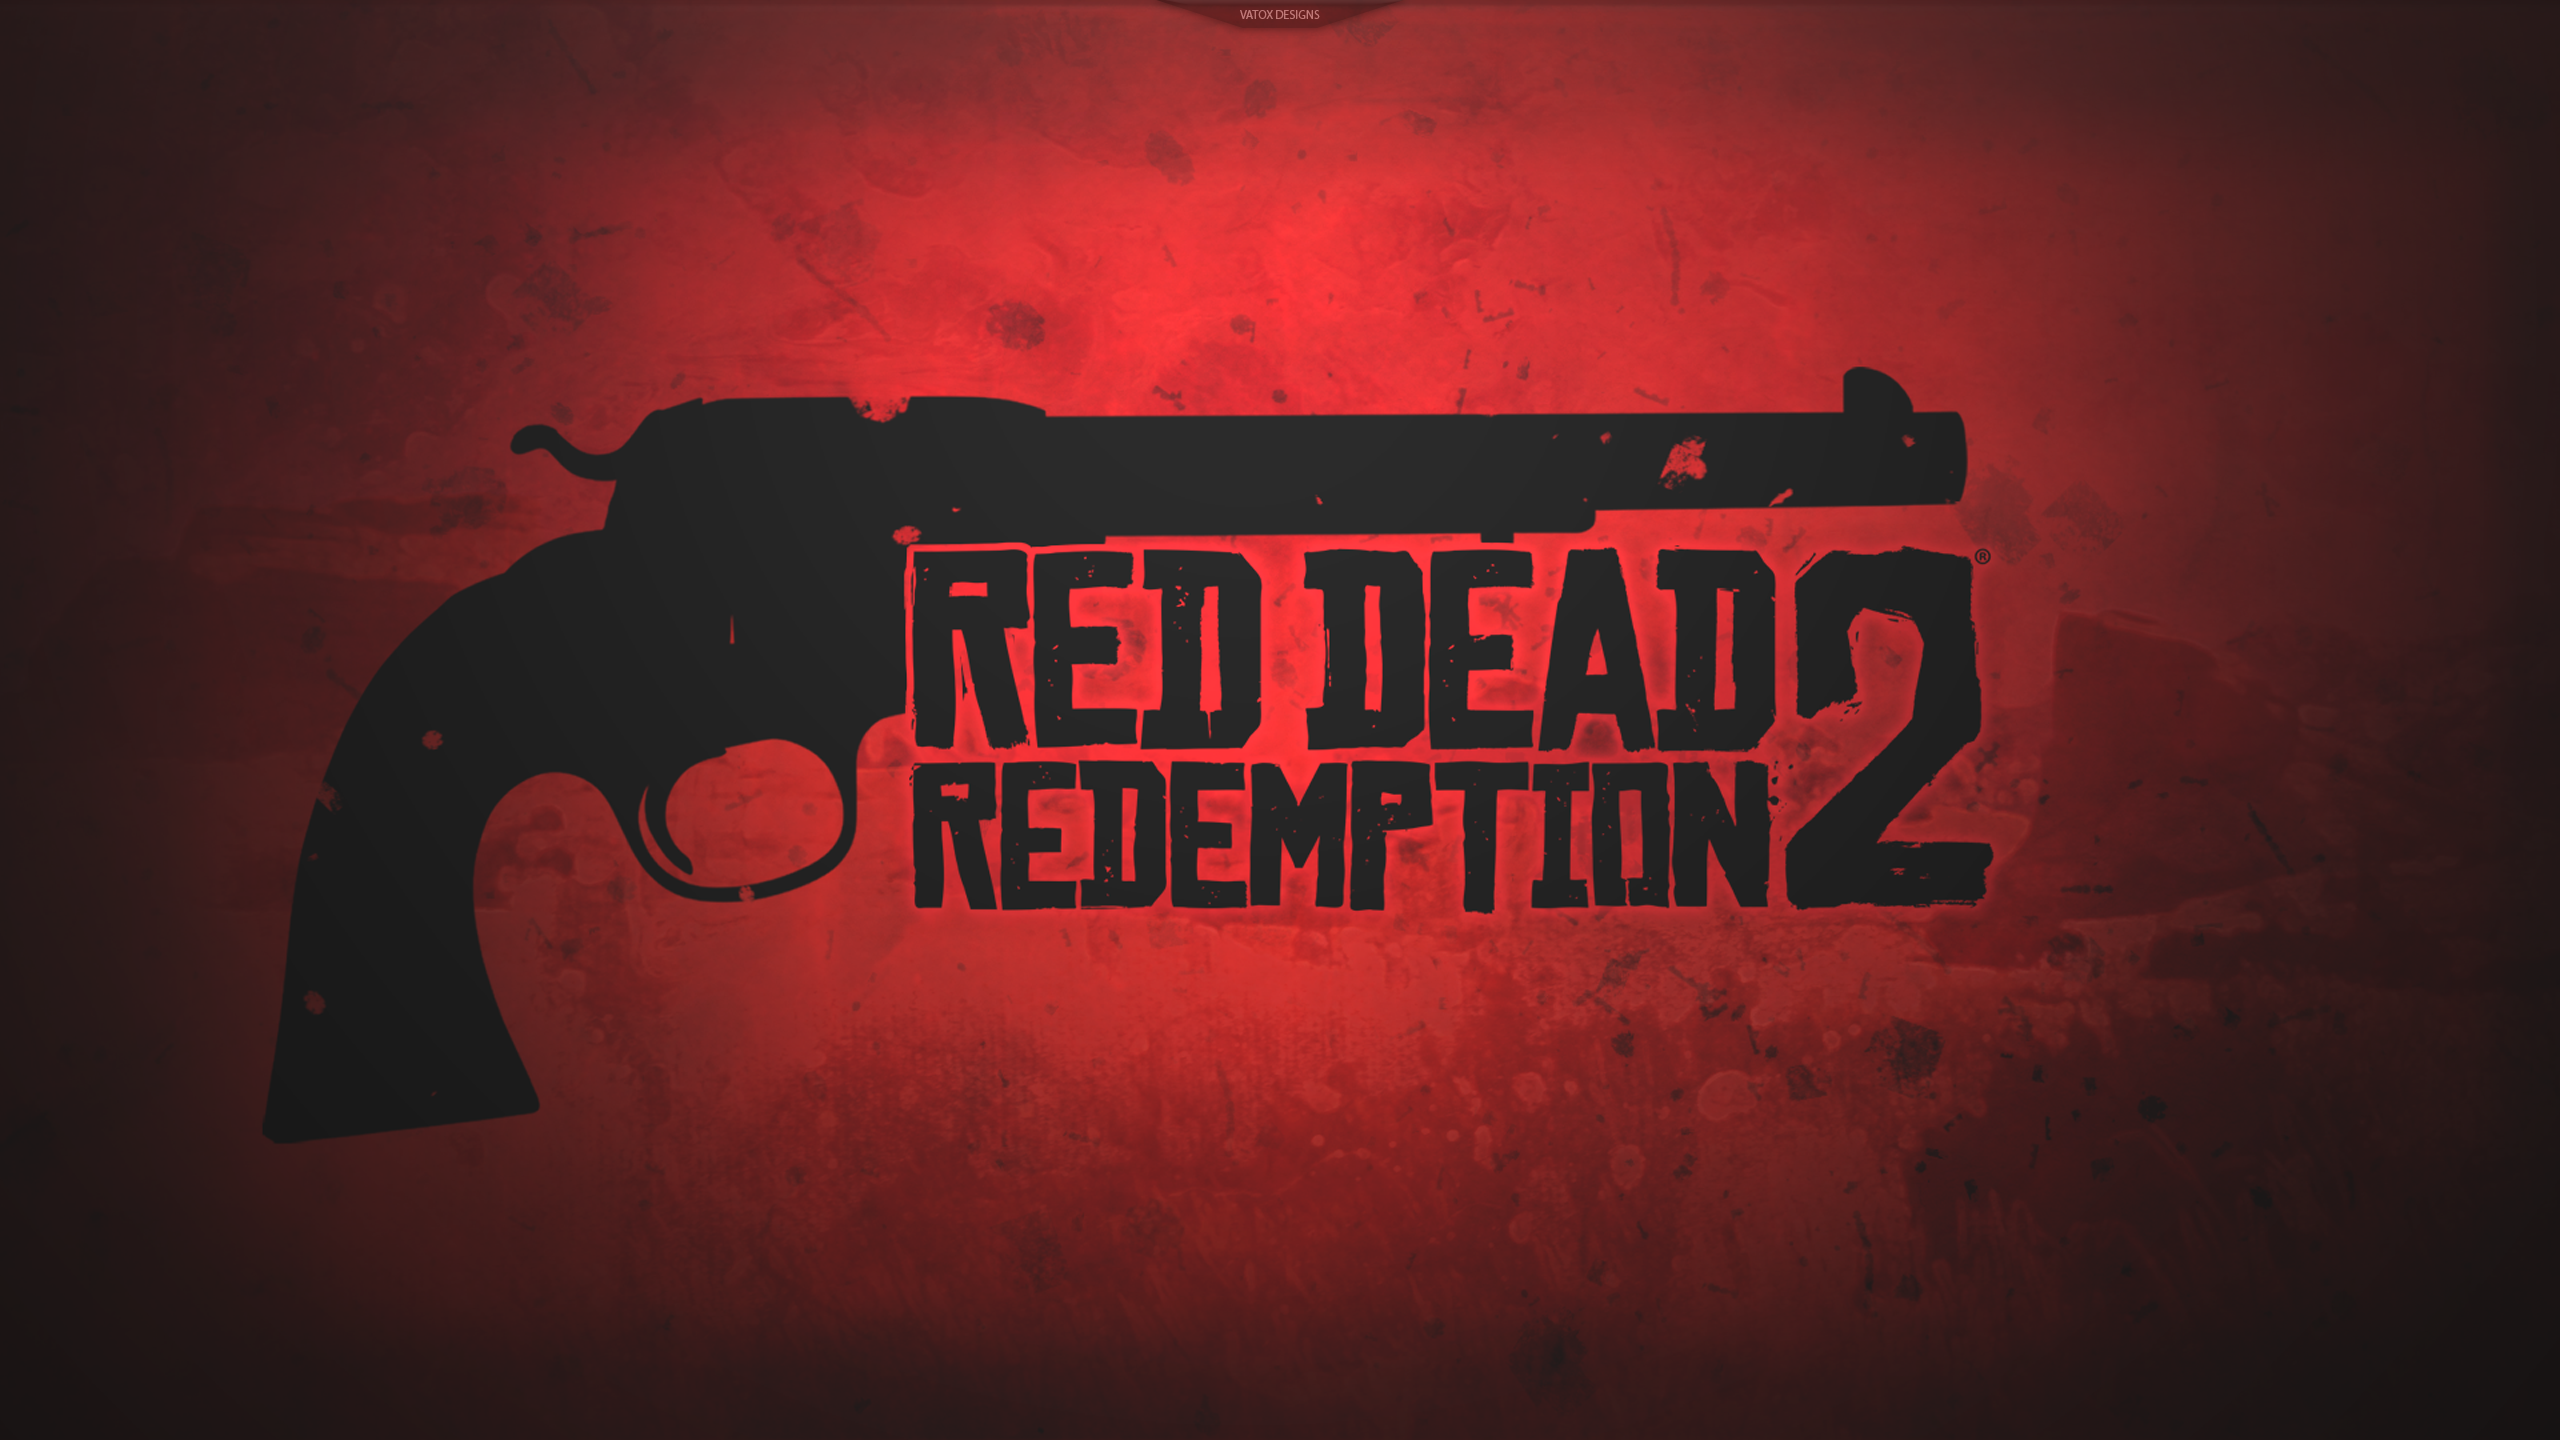 Steam Community :: Video :: RED DEAD REDEMPTION 2 - MAPA TESOURO